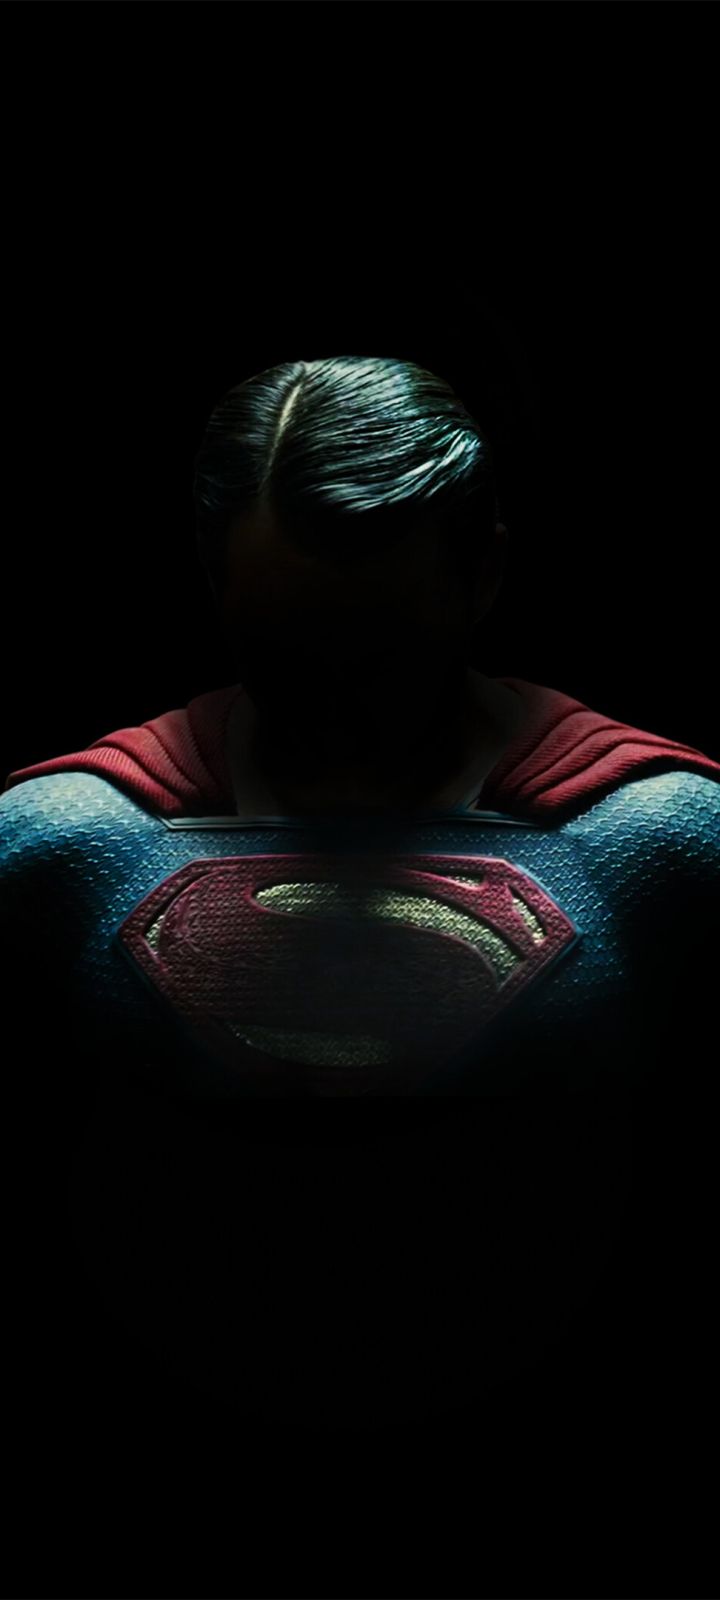 Superman Amoled 720x1600 Resolution Wallpaper, HD Superheroes 4K Wallpaper, Image, Photo and Background